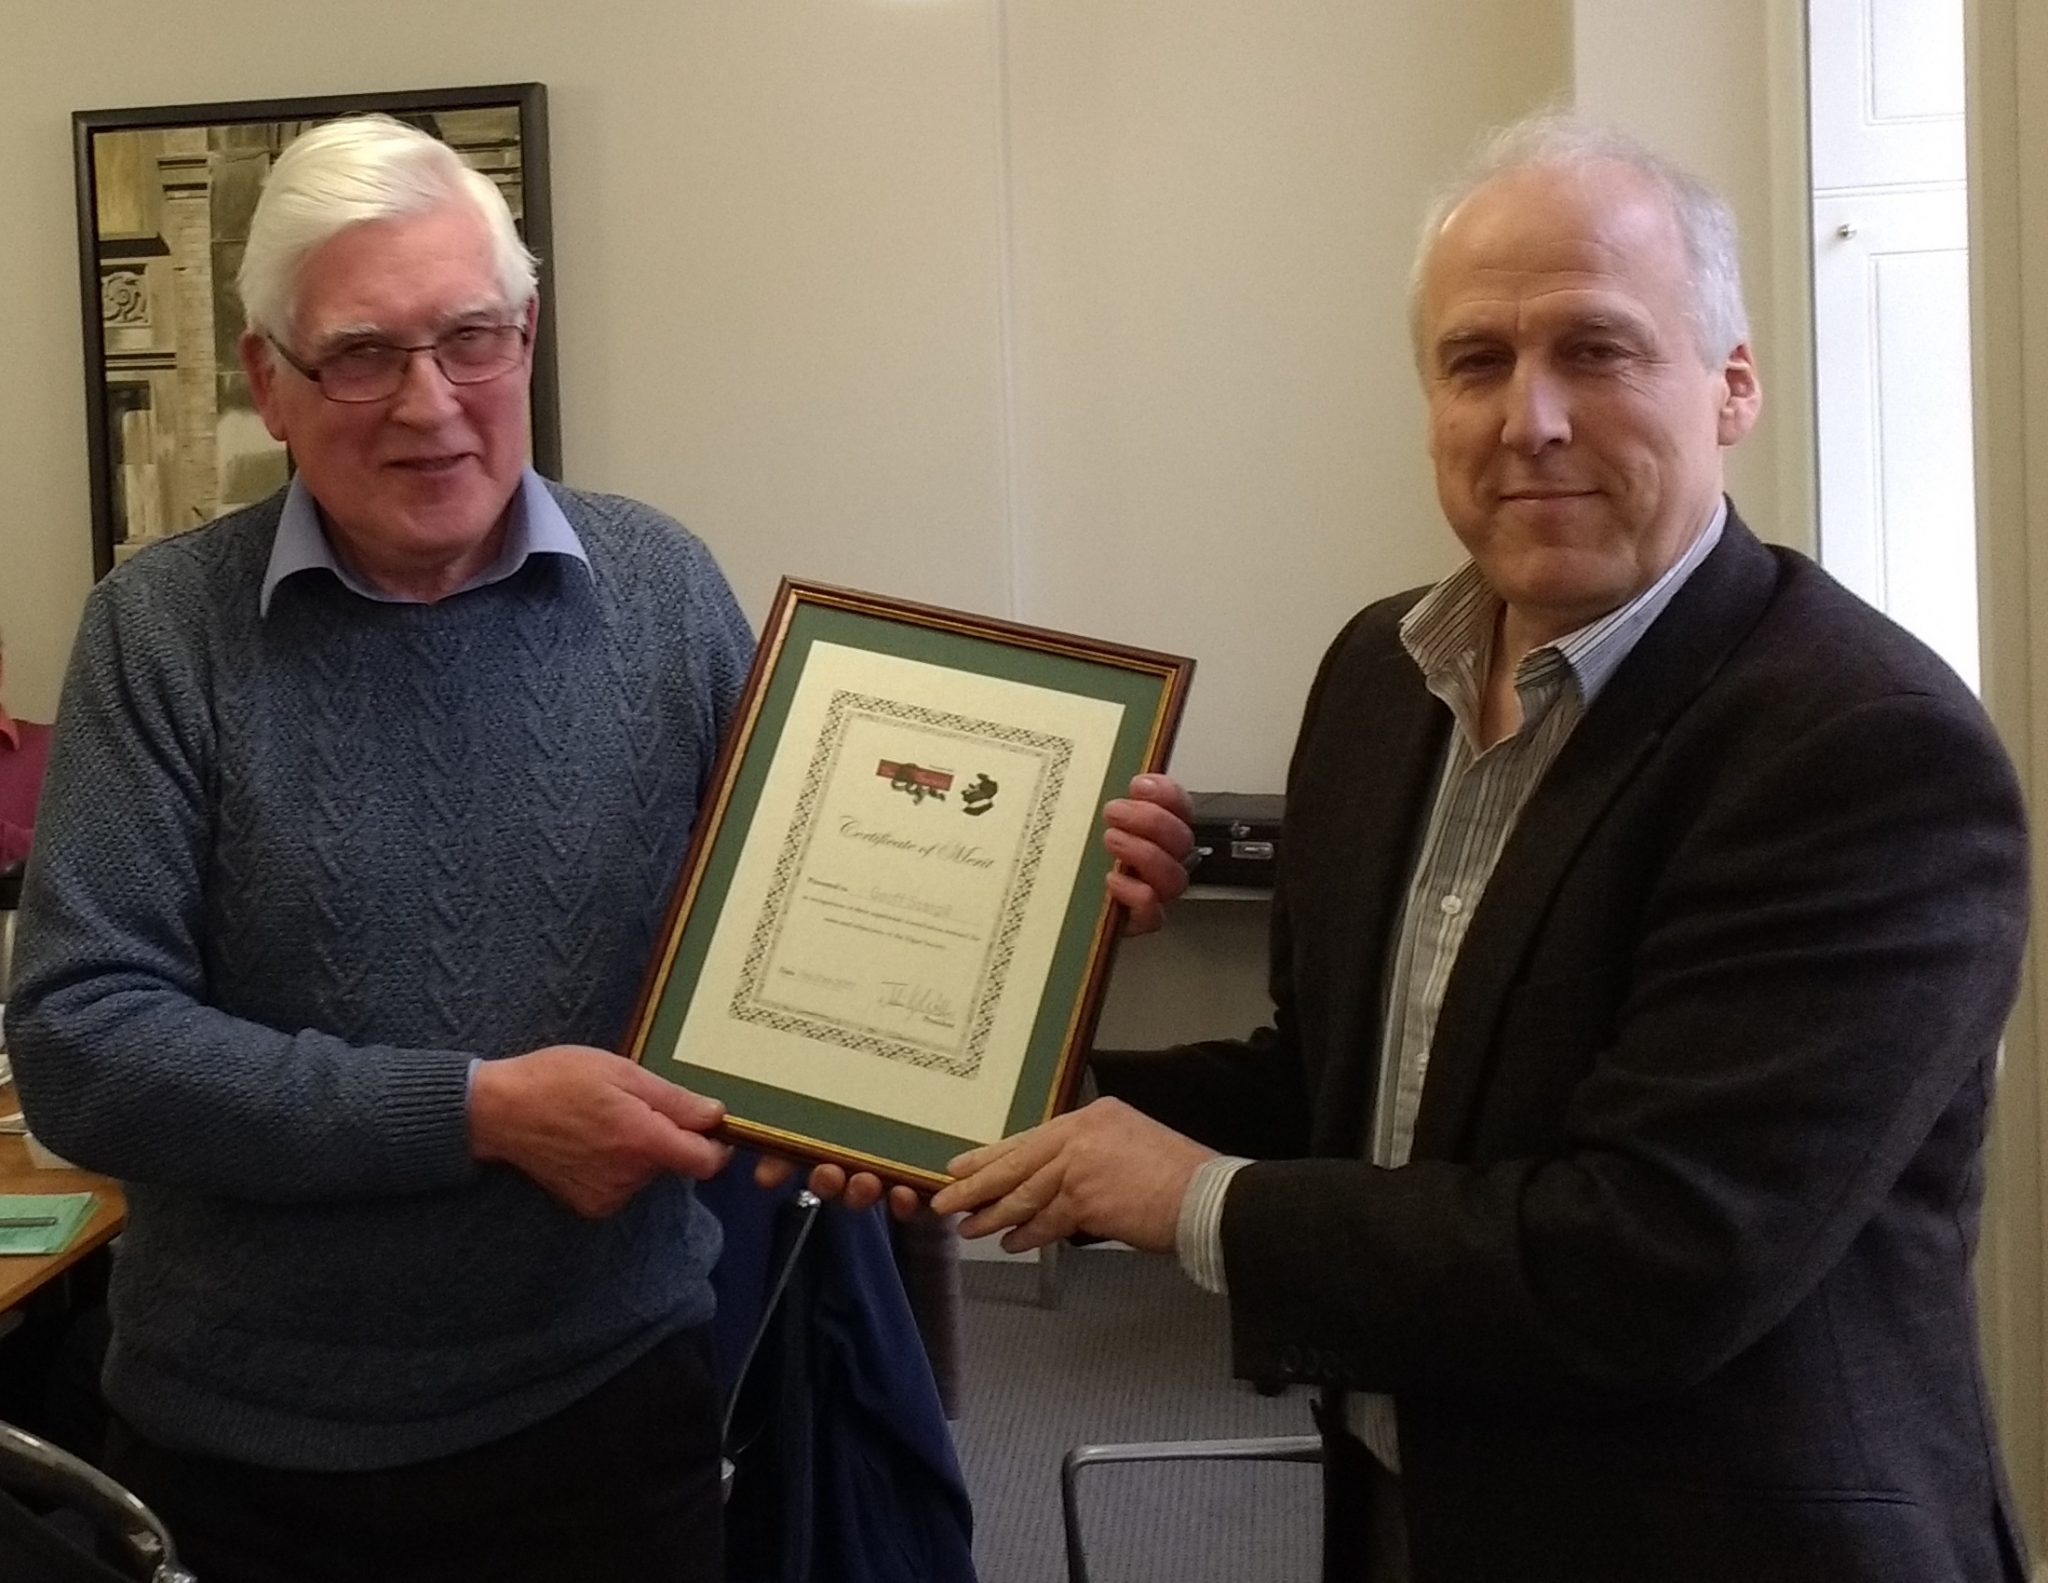 Geoff Scargill receives the Certificate of Merit